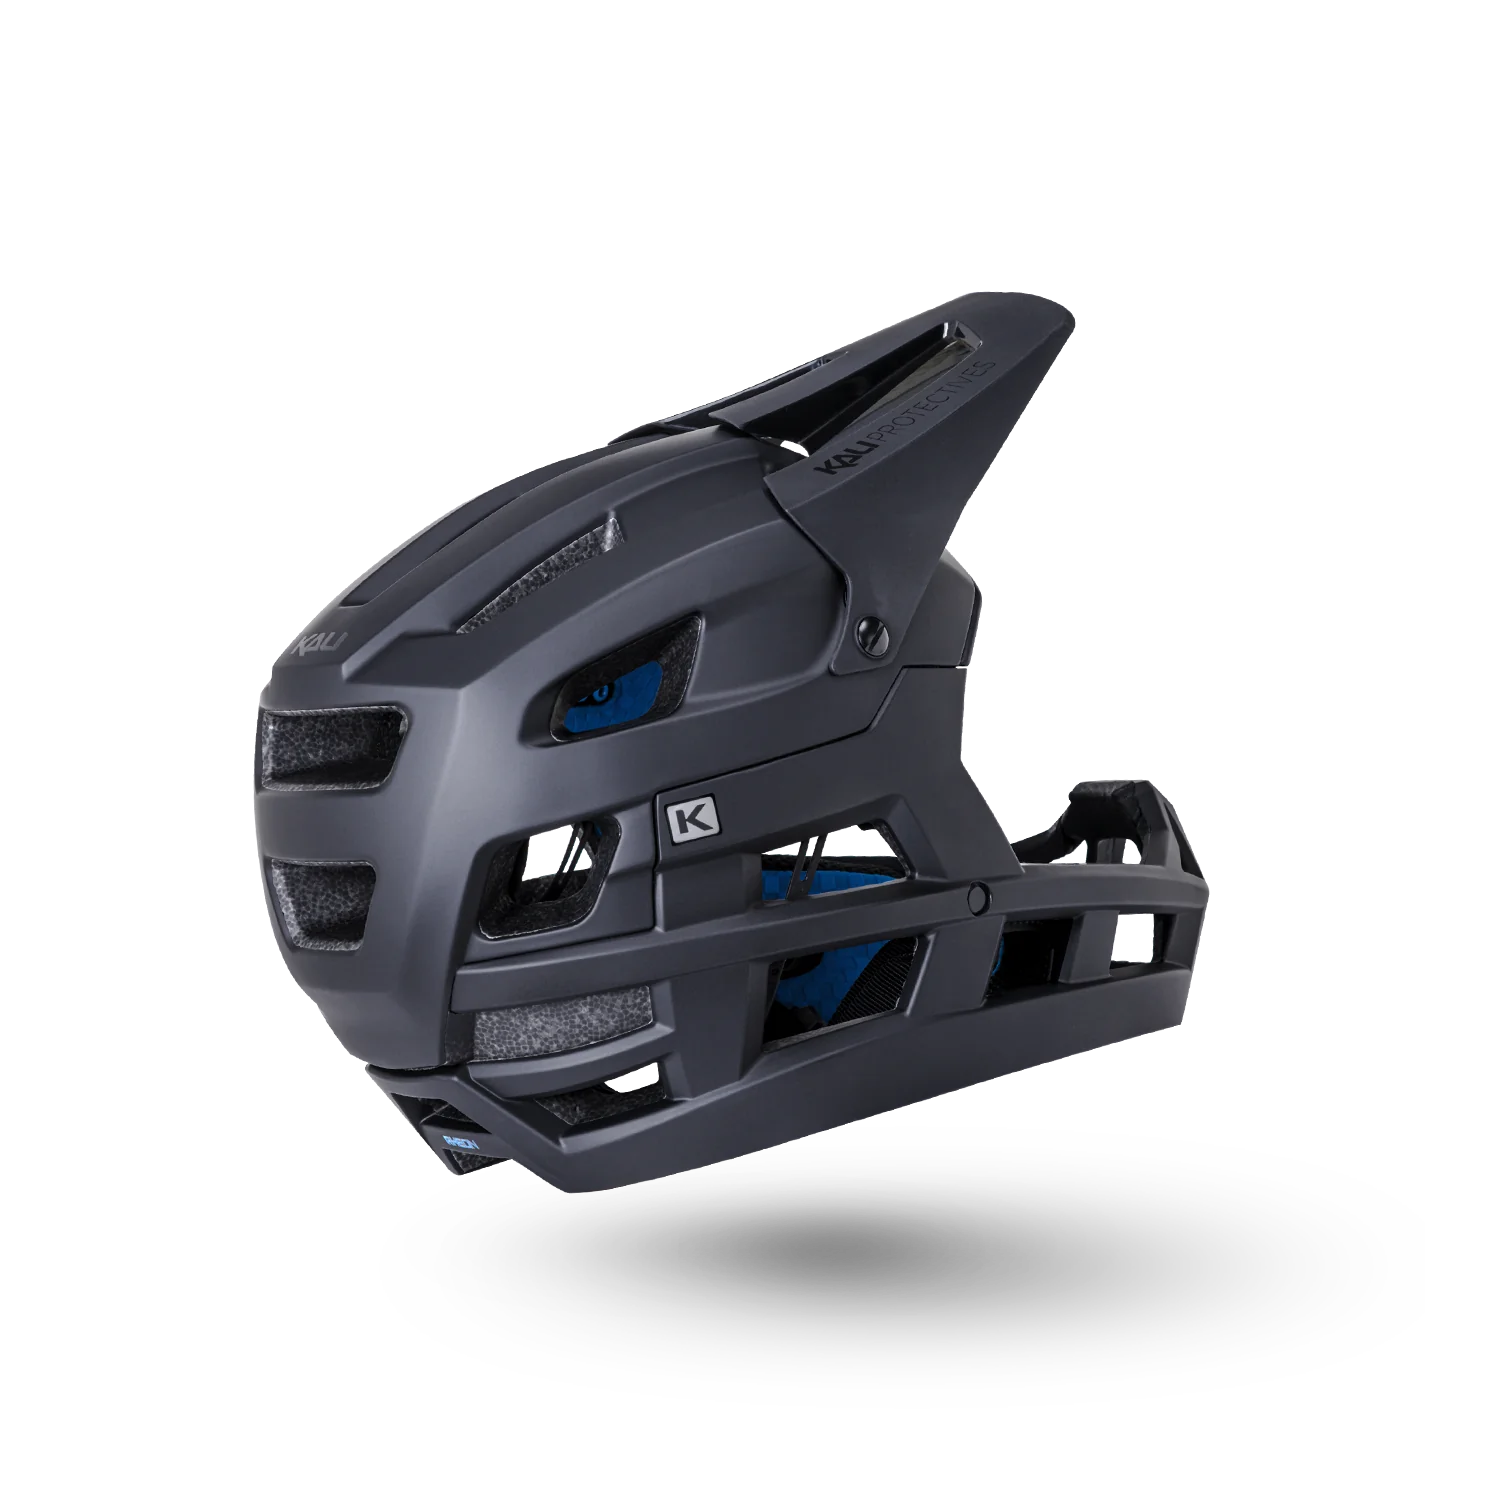 Kali DH Invader 2.0 Solid Matte / Gloss Black Bicycle Helmet